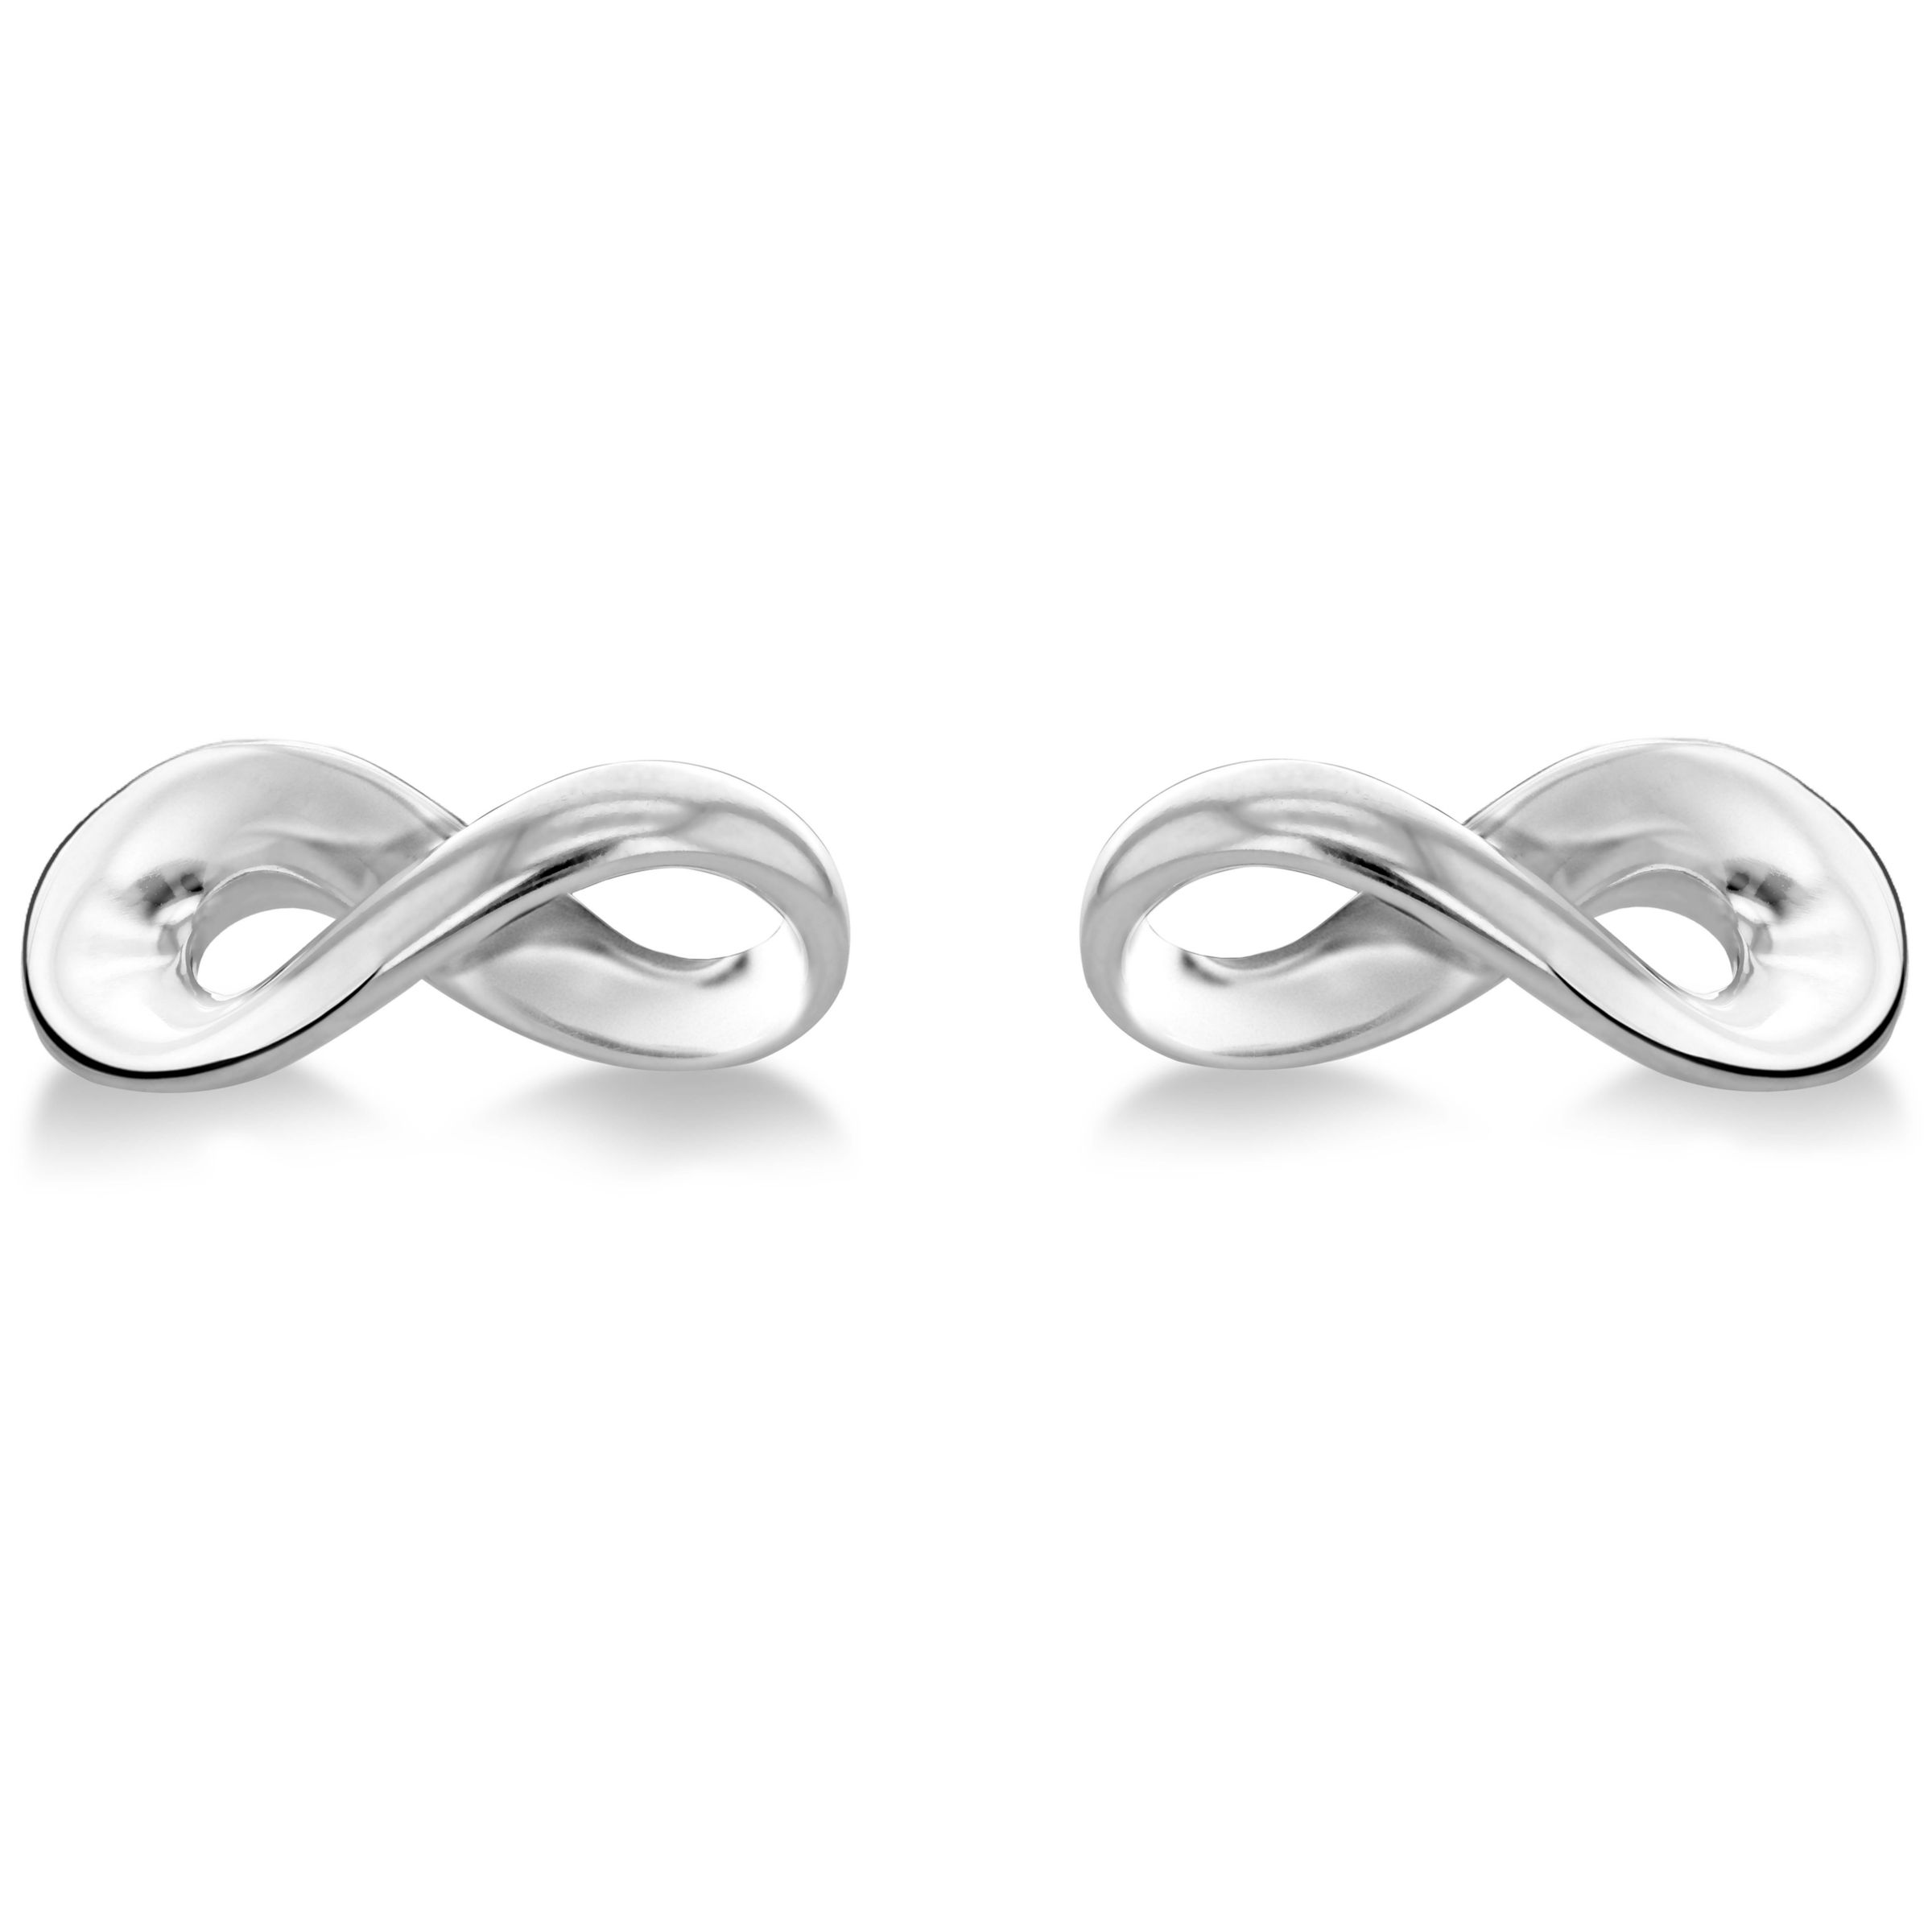 Georg Jensen Infinity Cufflinks, Silver